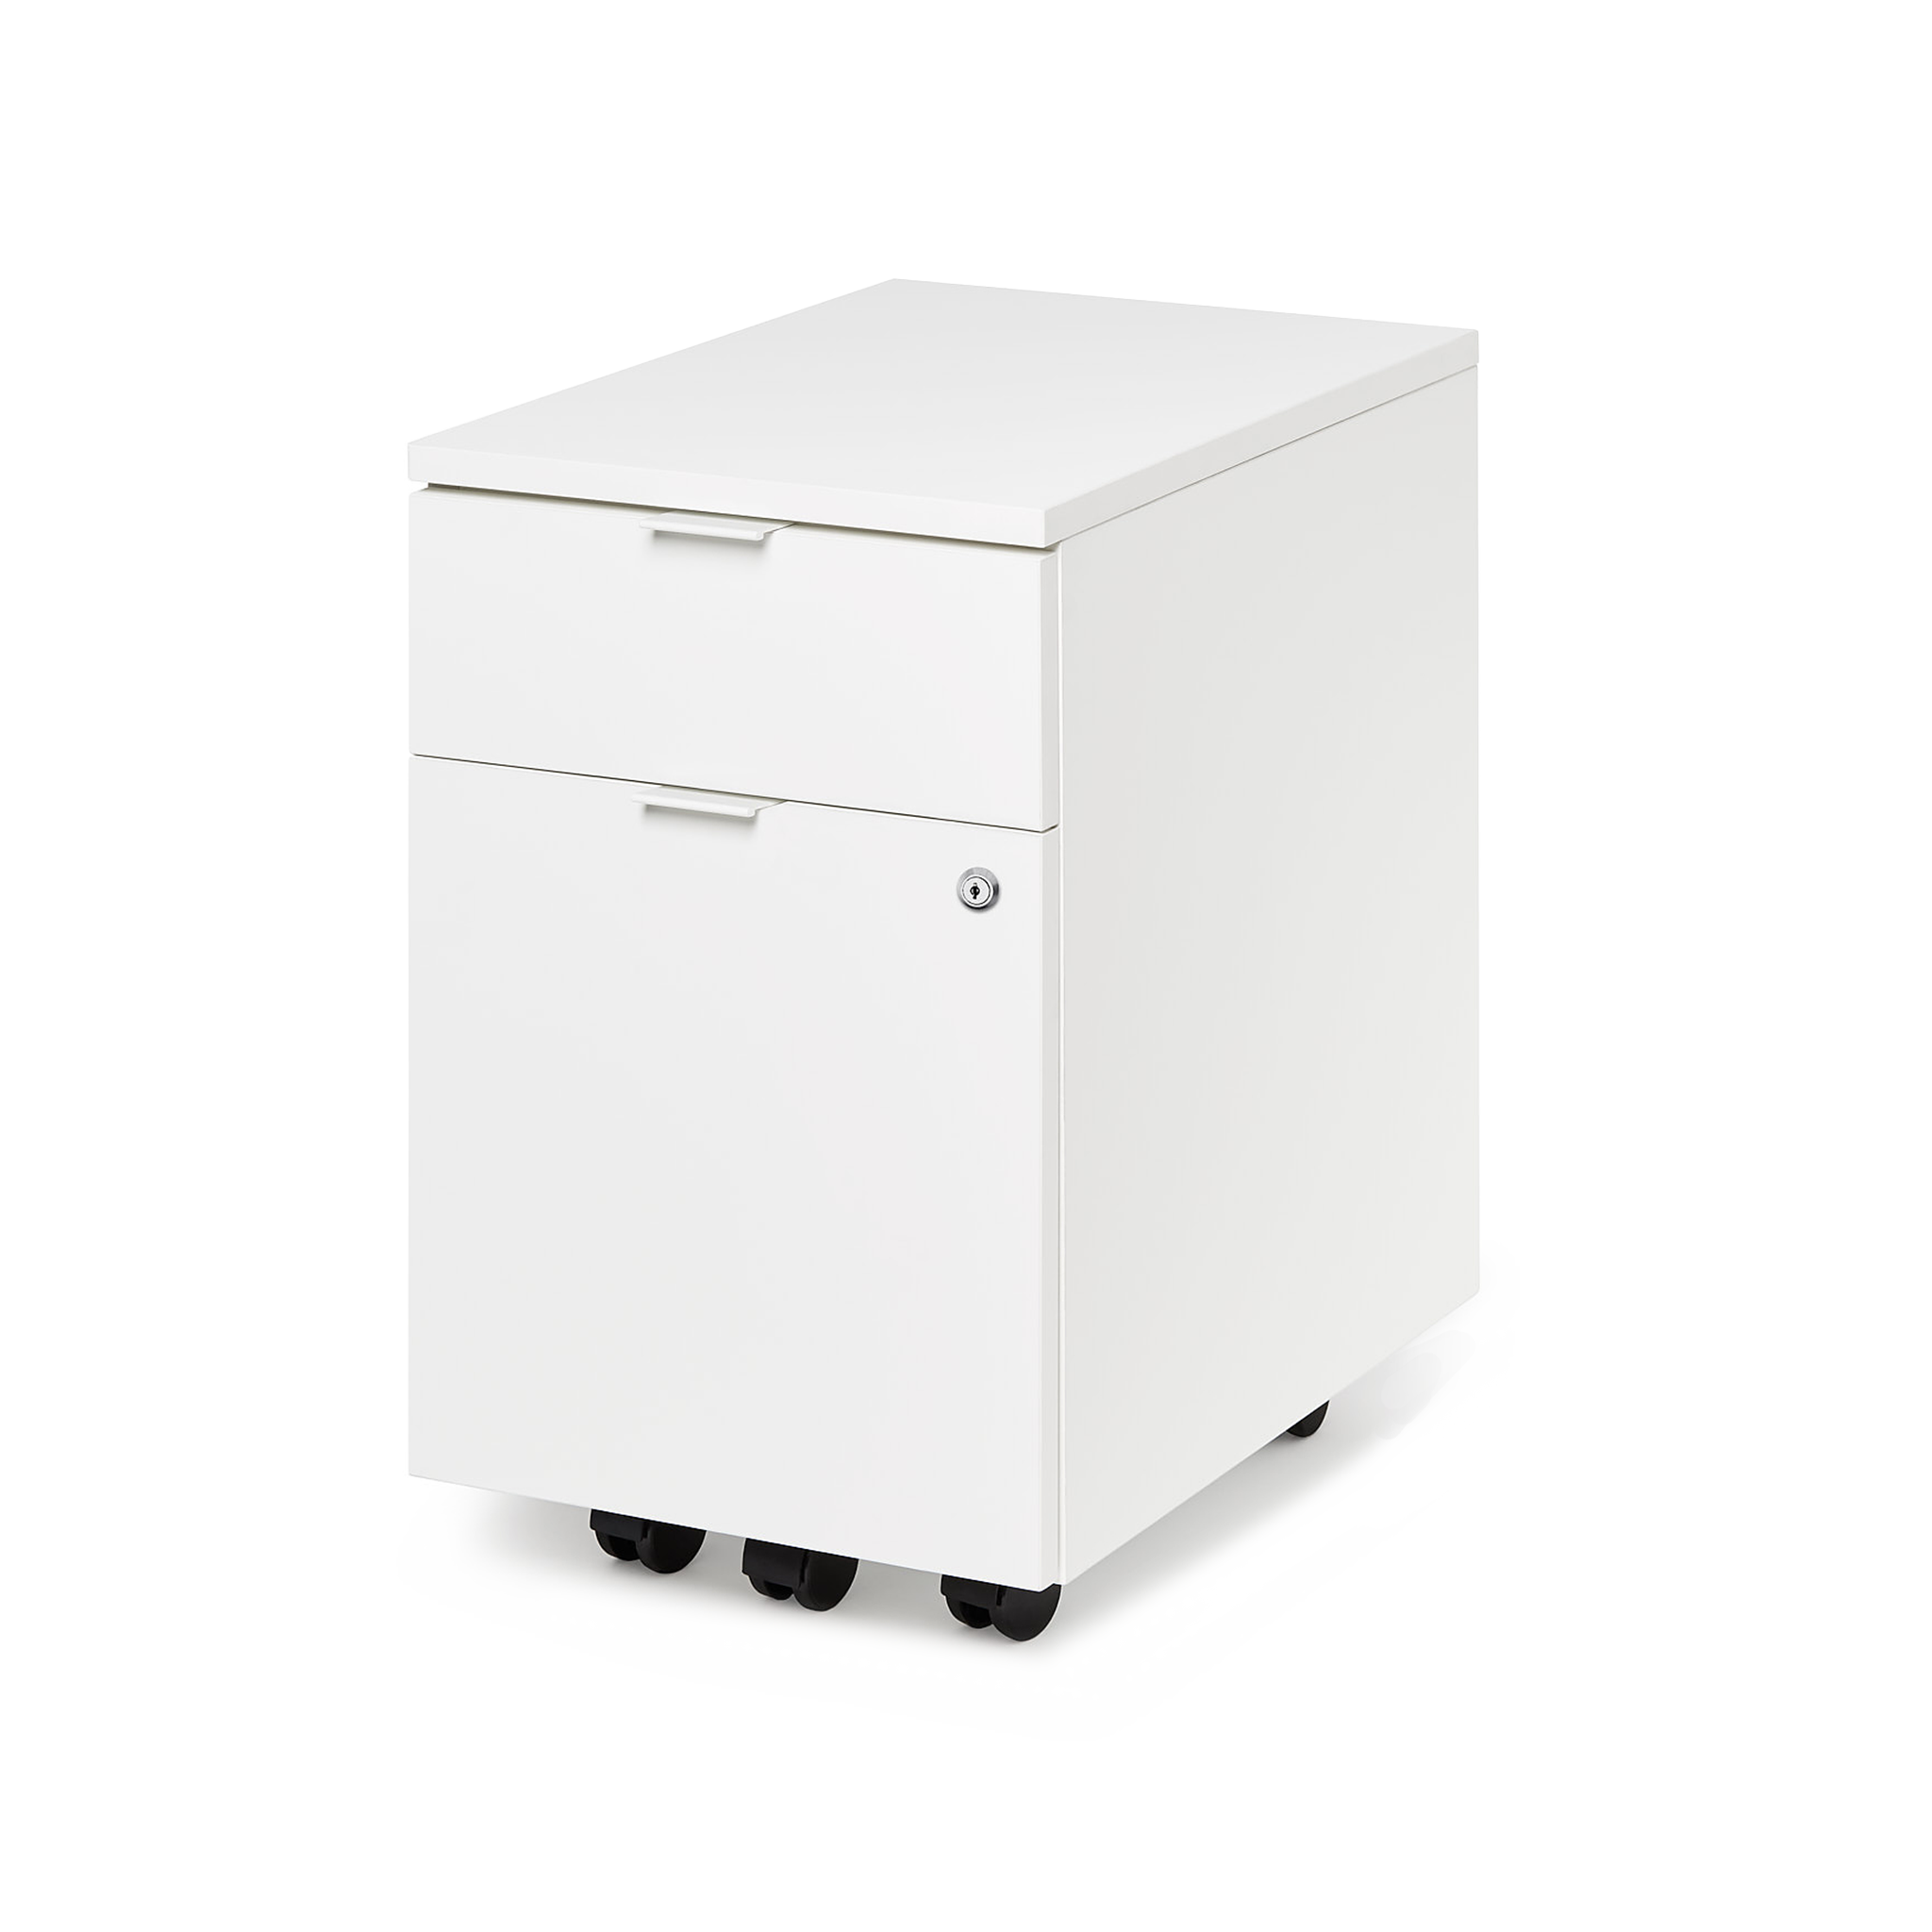 Neat Filing Cabinet - White-White - Blanc-Blanc